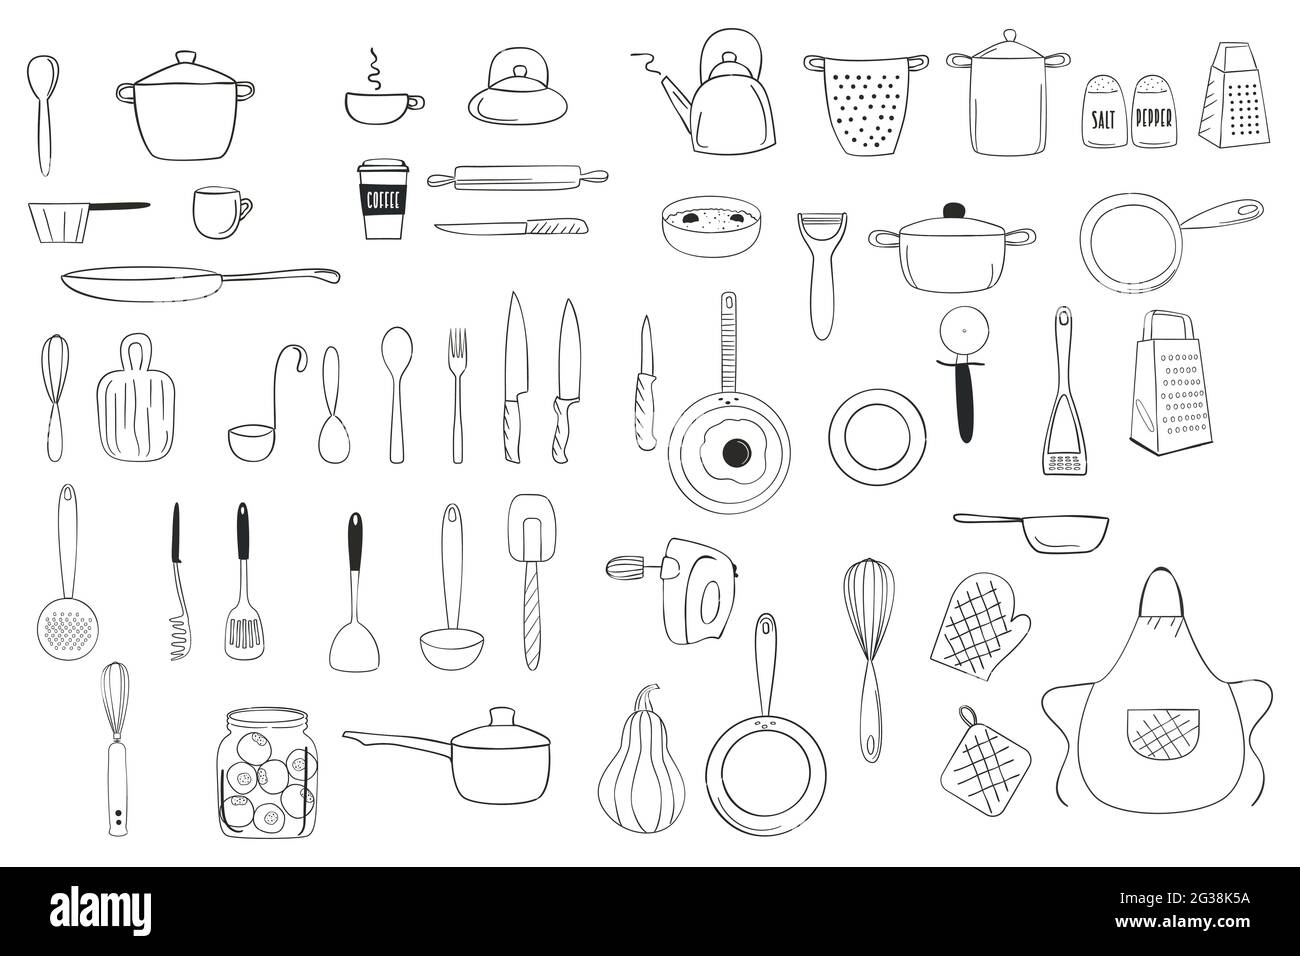 Küchengeräte umreißen Doodle Linie Kunst Clipart. Vektorgrafik  Stock-Vektorgrafik - Alamy